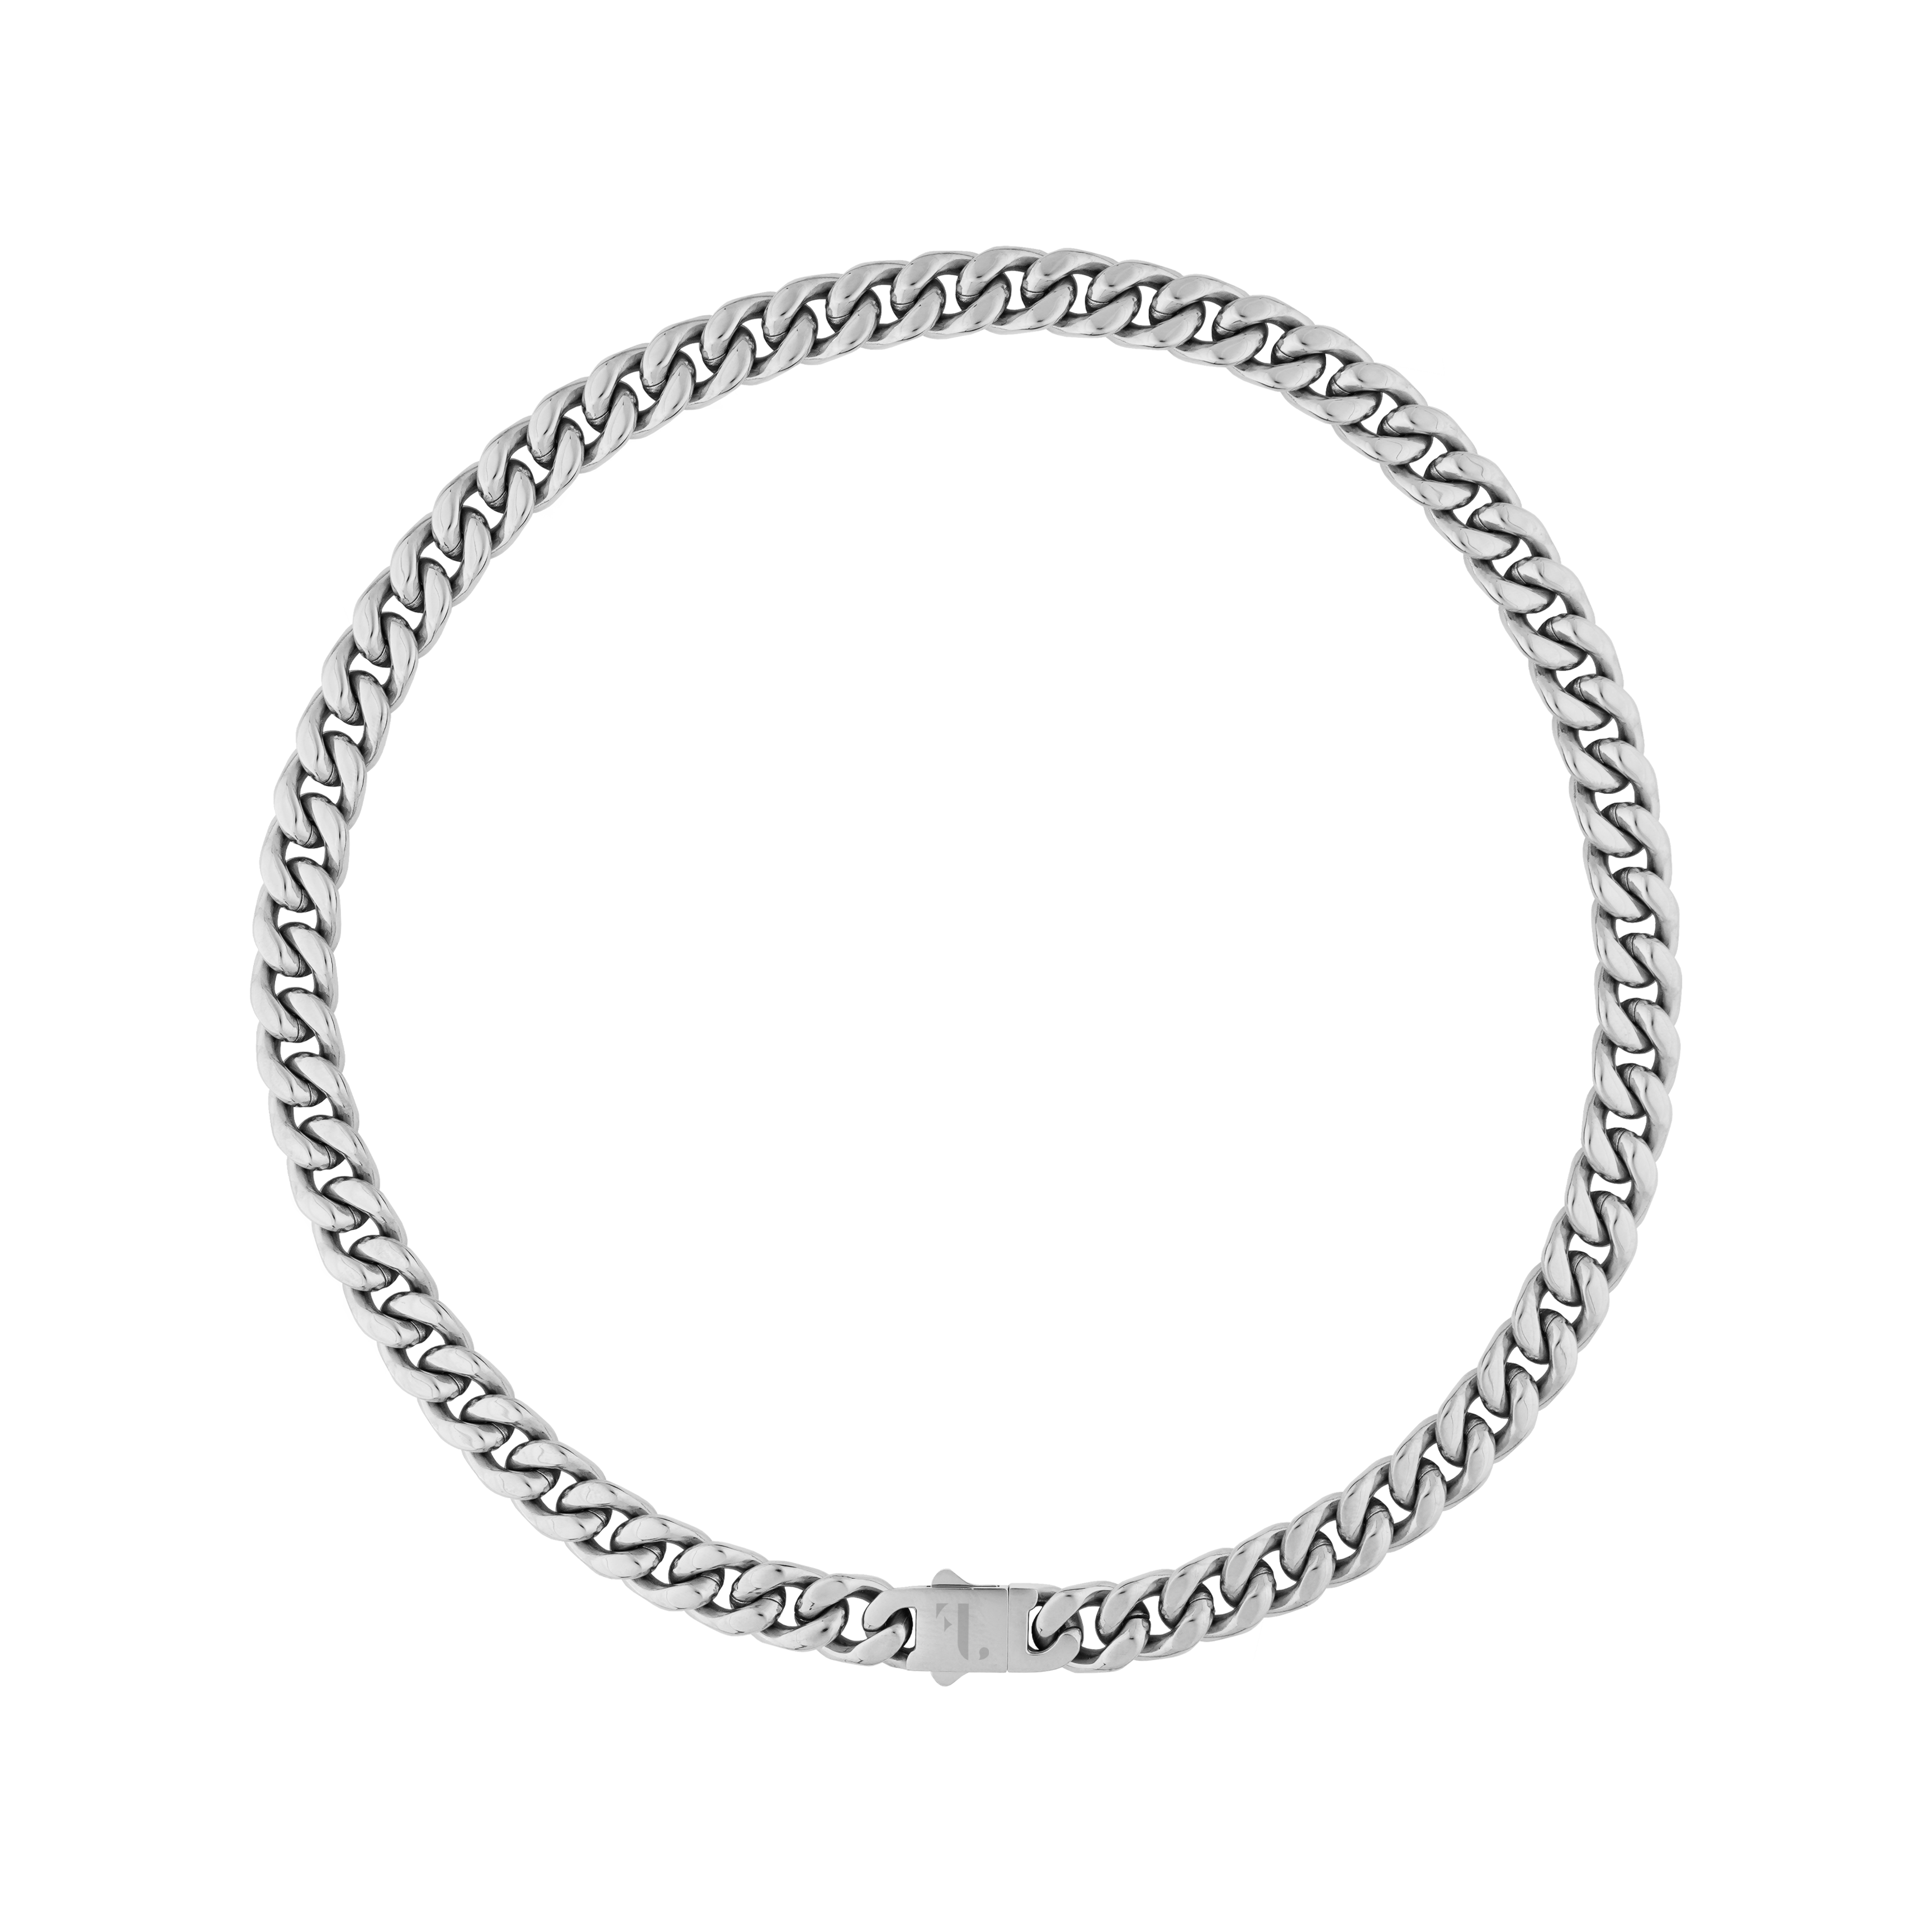 FJ Watches cass necklace cuban link chain silver men 10mm 45cm 50cm stainless steel